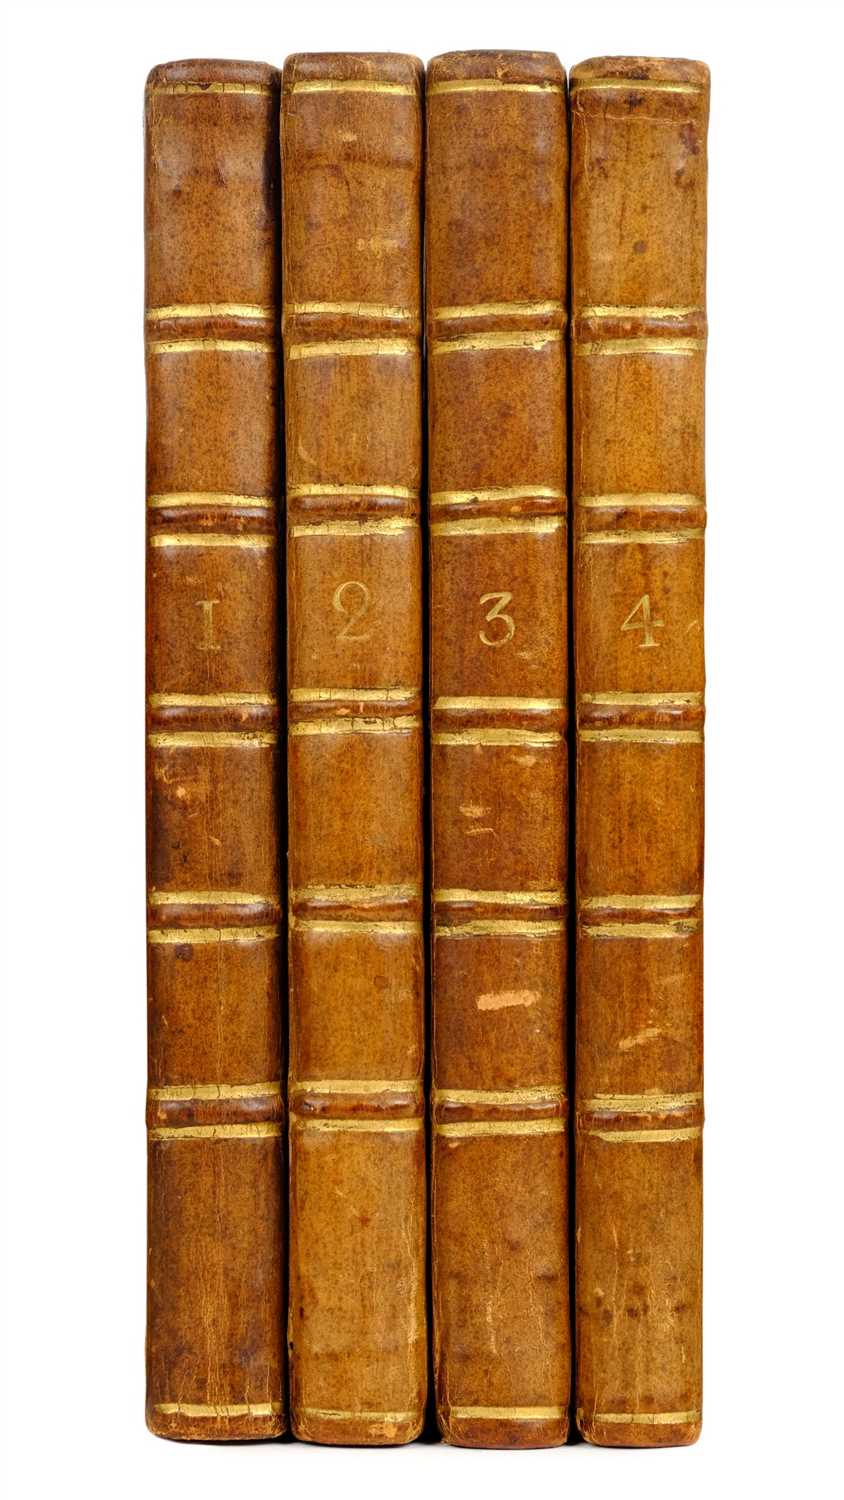 Lot 255 - Treyssac de Vergy (Pierre Henri). The Mistakes of the Heart, 4 volumes, 1771